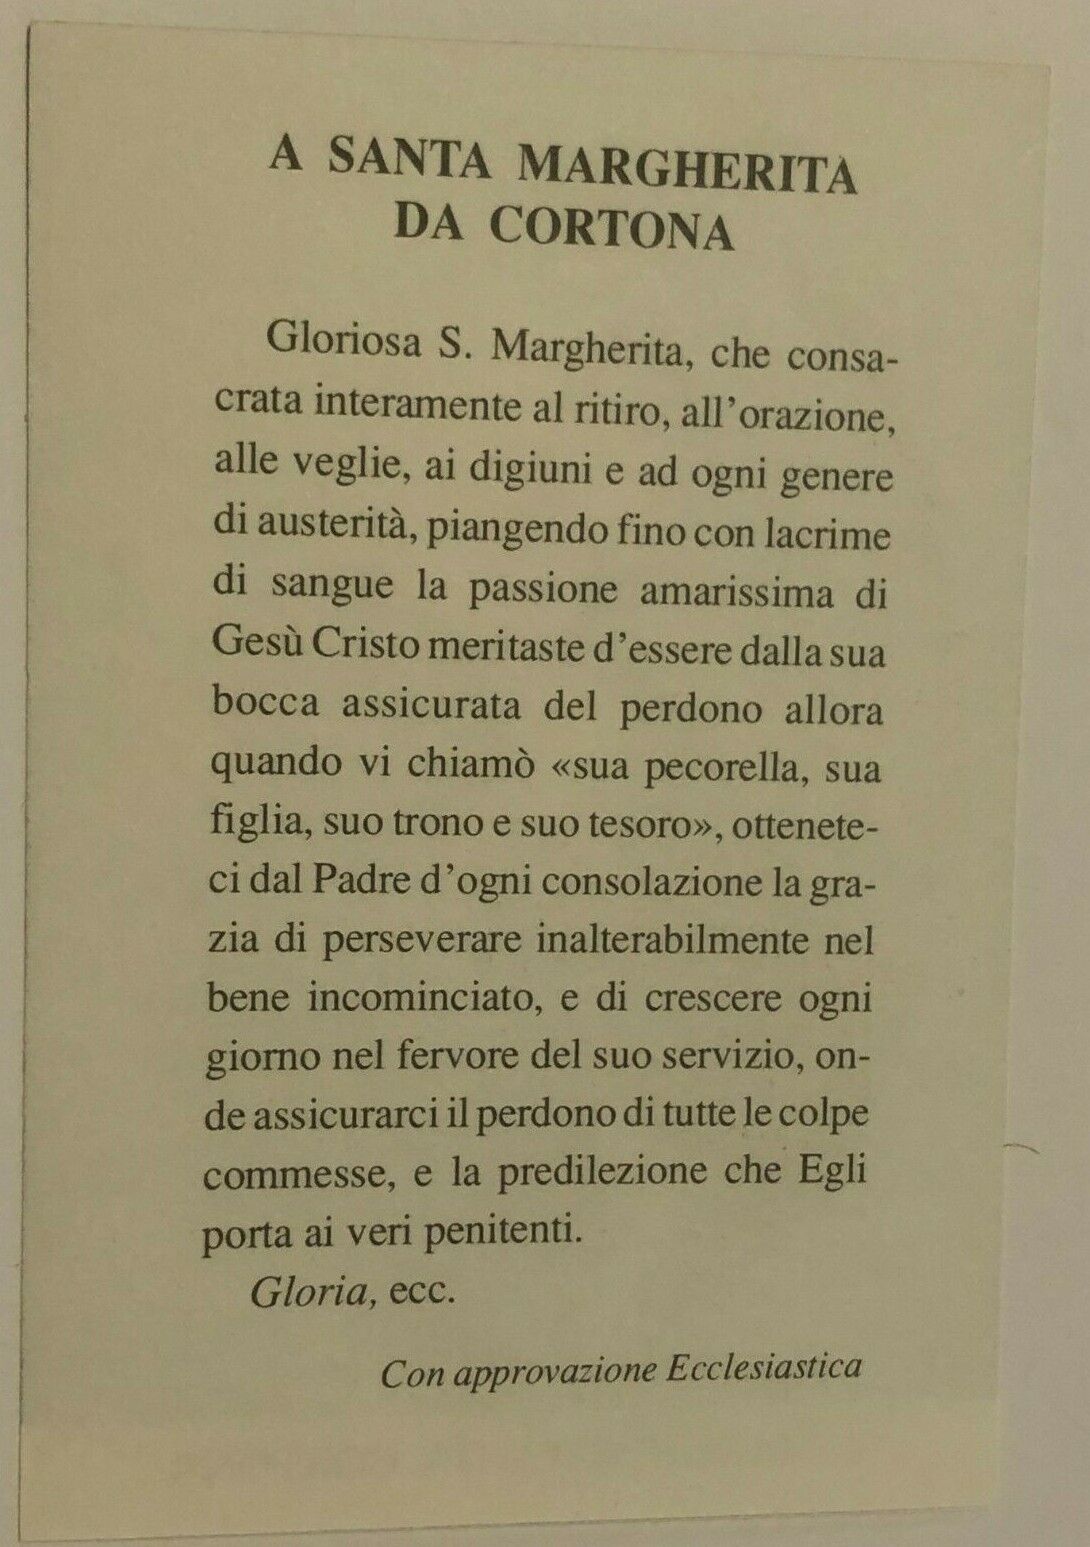 Saint Margaret of Cortona/S. Margherita da Cortona Prayer  Card in Italian, New - Bob and Penny Lord